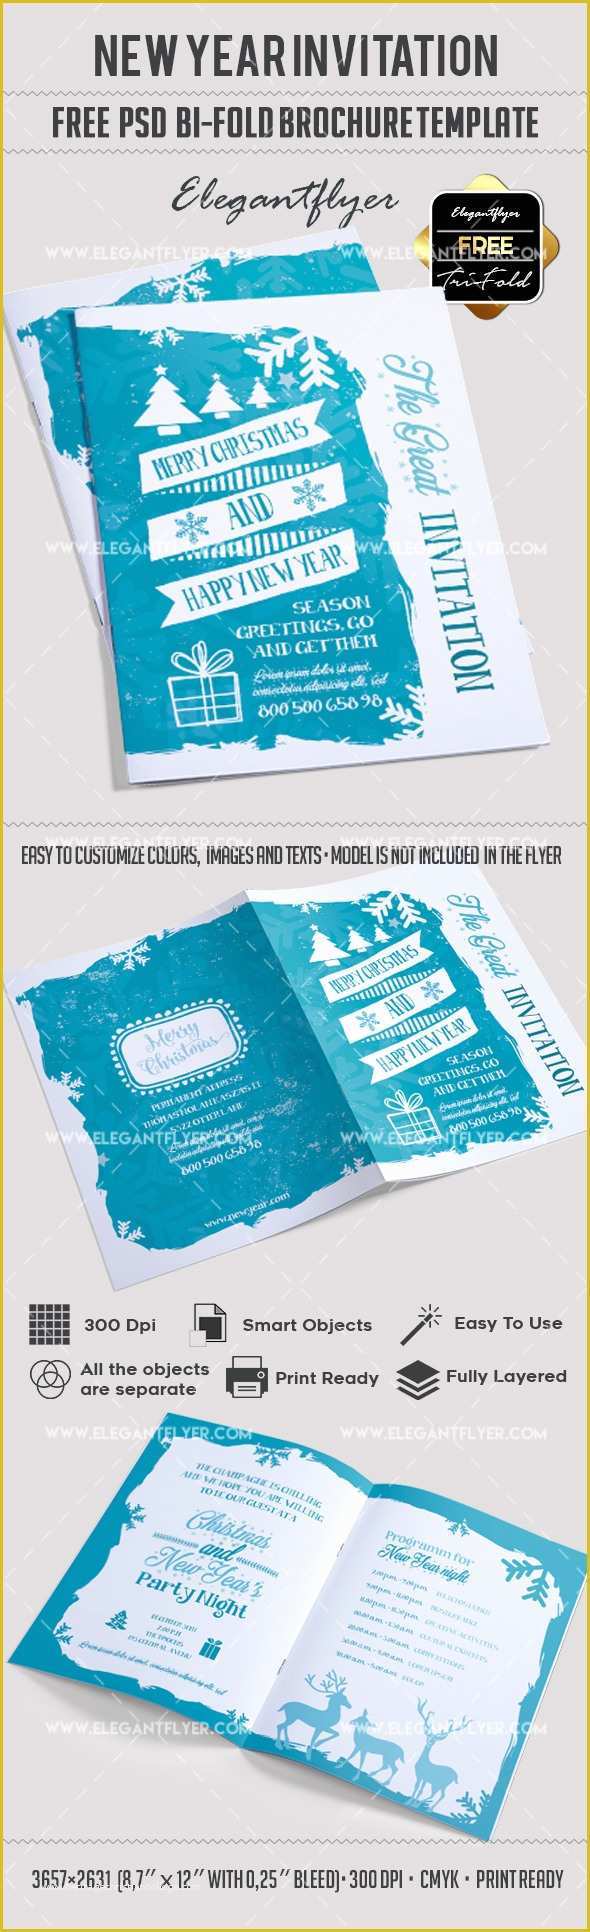 Bi Fold Brochure Template Free Of Download New Year Invitation – Free Bi Fold Psd Brochure